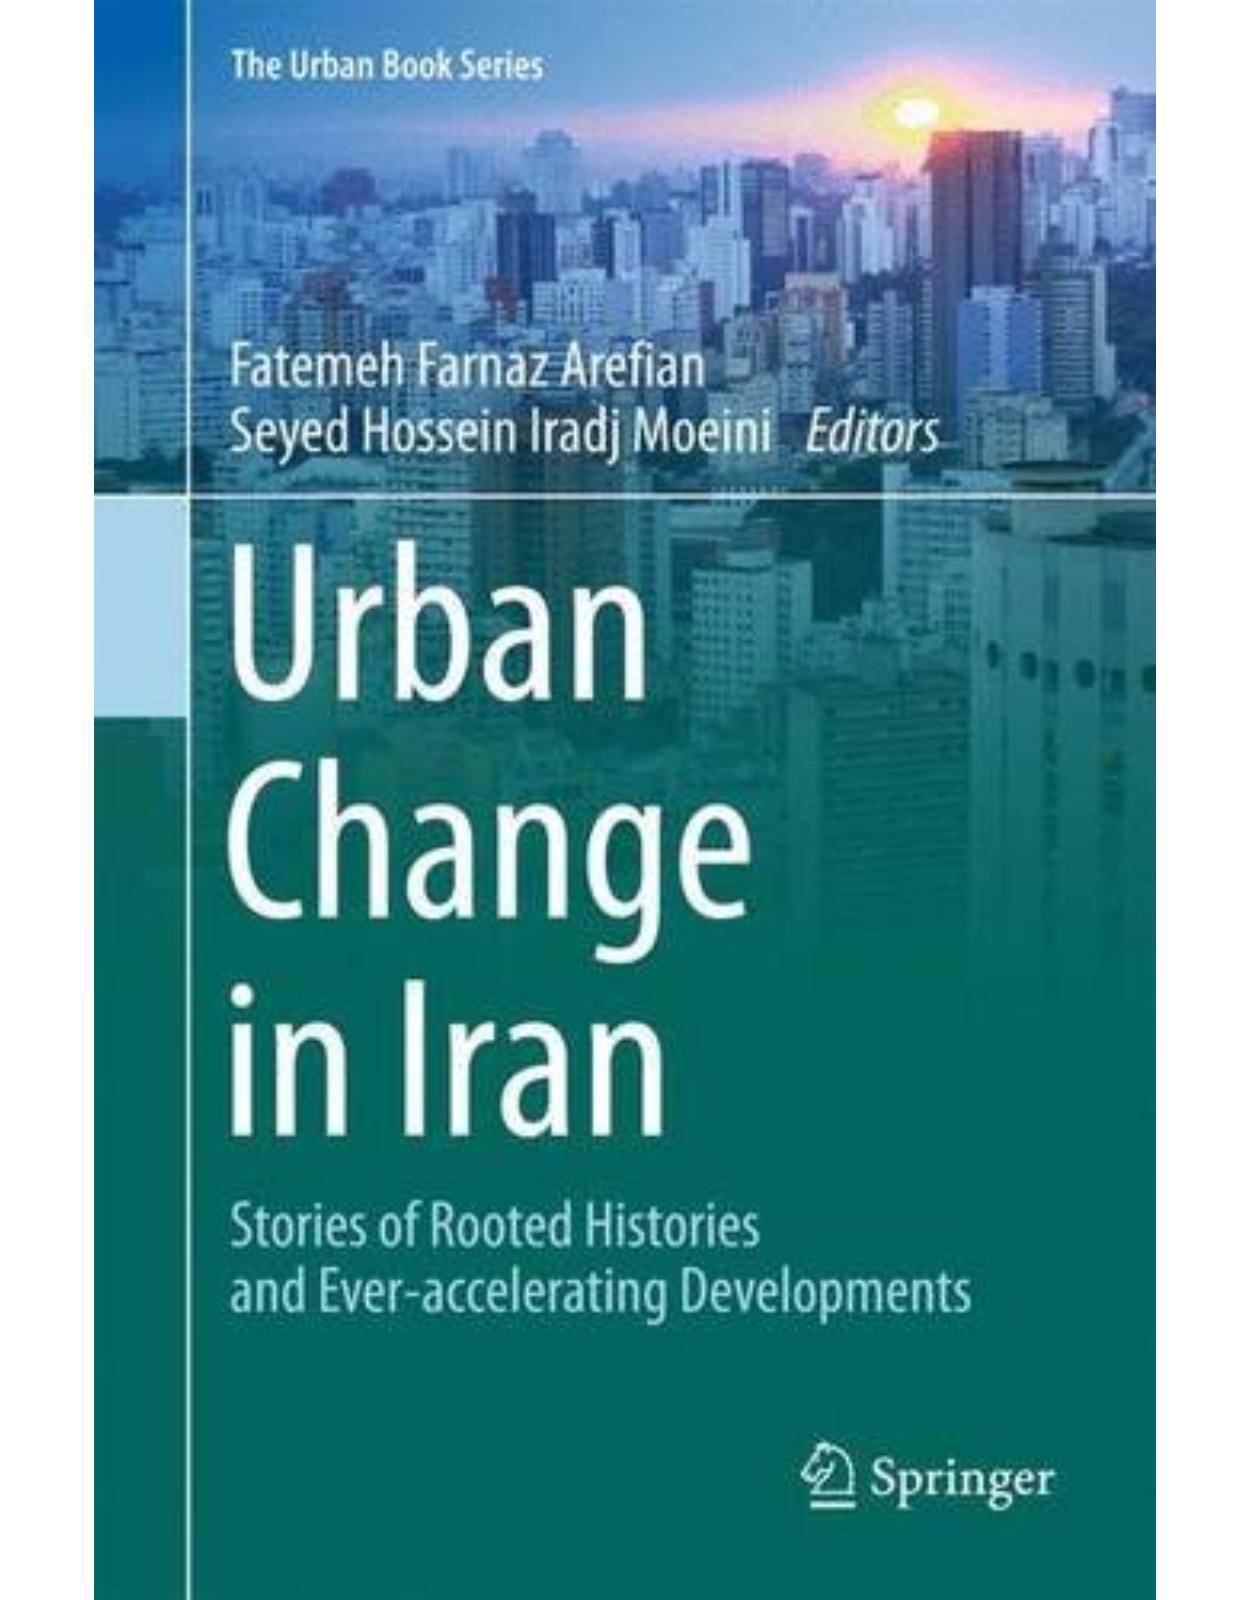 Urban Change in Iran